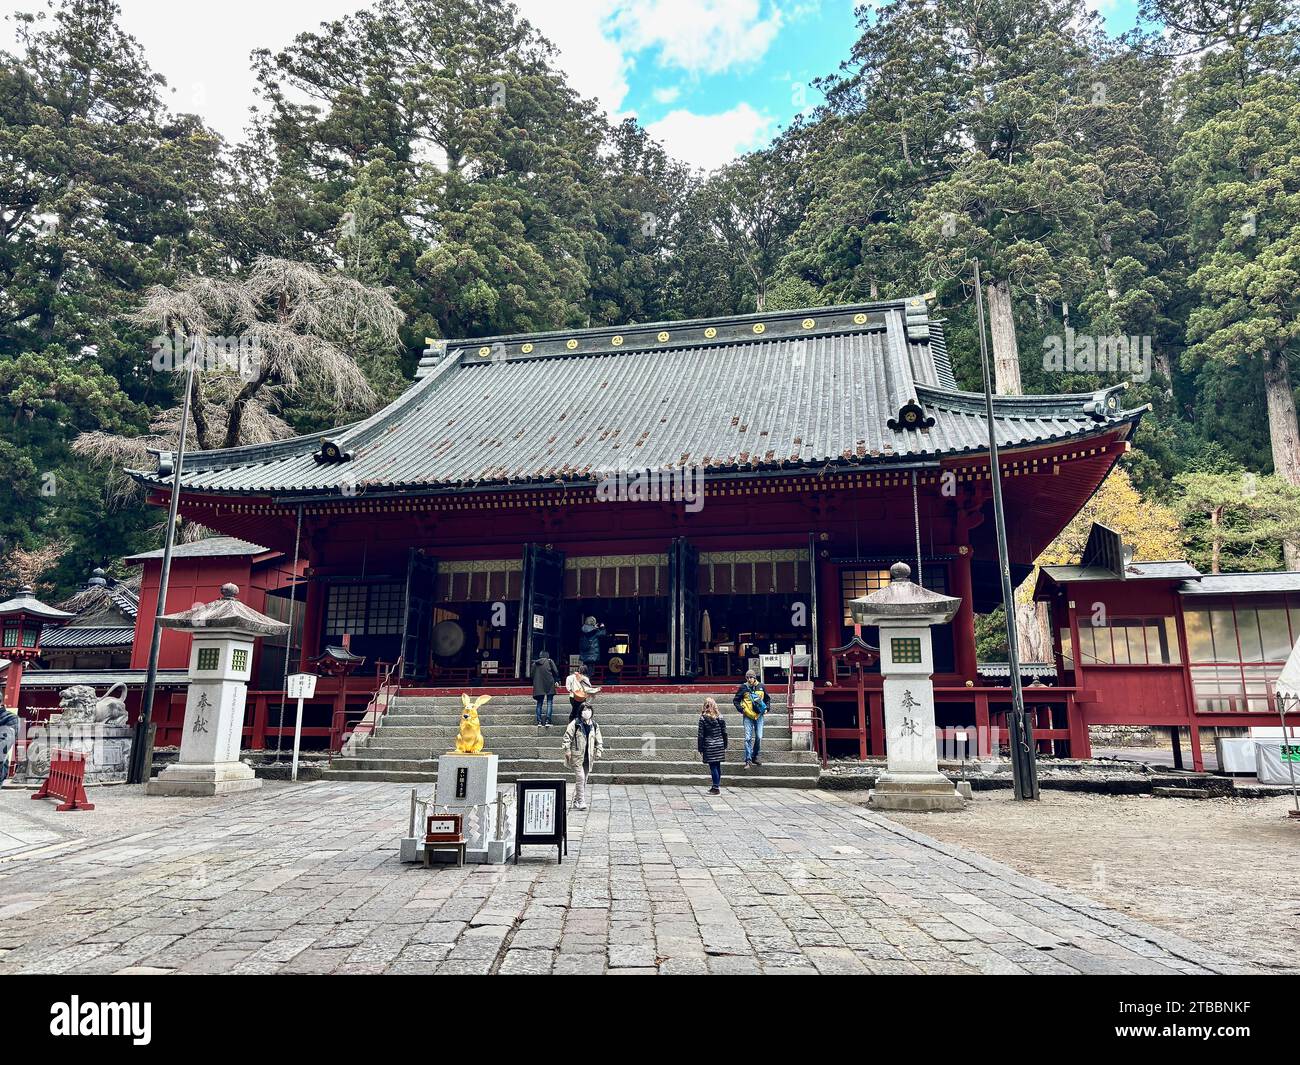 Buildings at the Futarasan Jinja shrine in Nikko, Japan. This shrine was founded in 767 by Shodo Shonin. Stock Photo